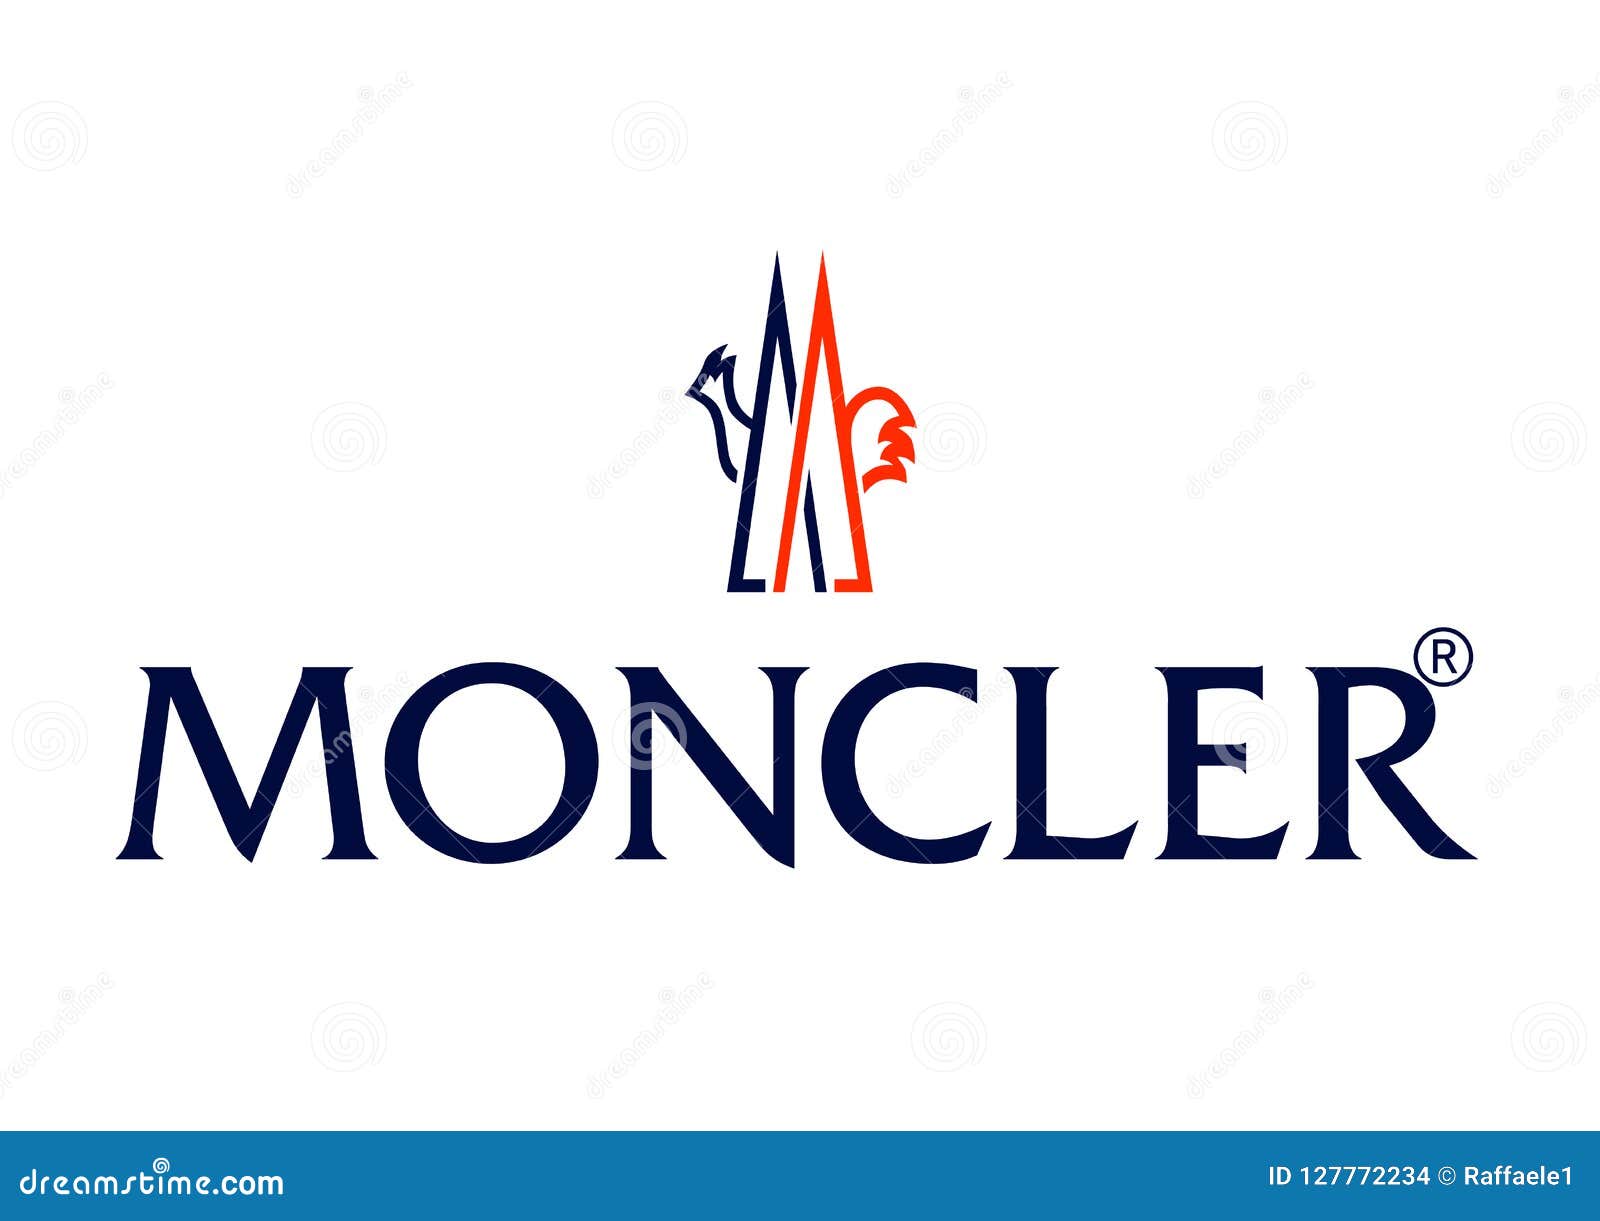 Moncler Logos Factory Sale, 50% OFF | campingcanyelles.com